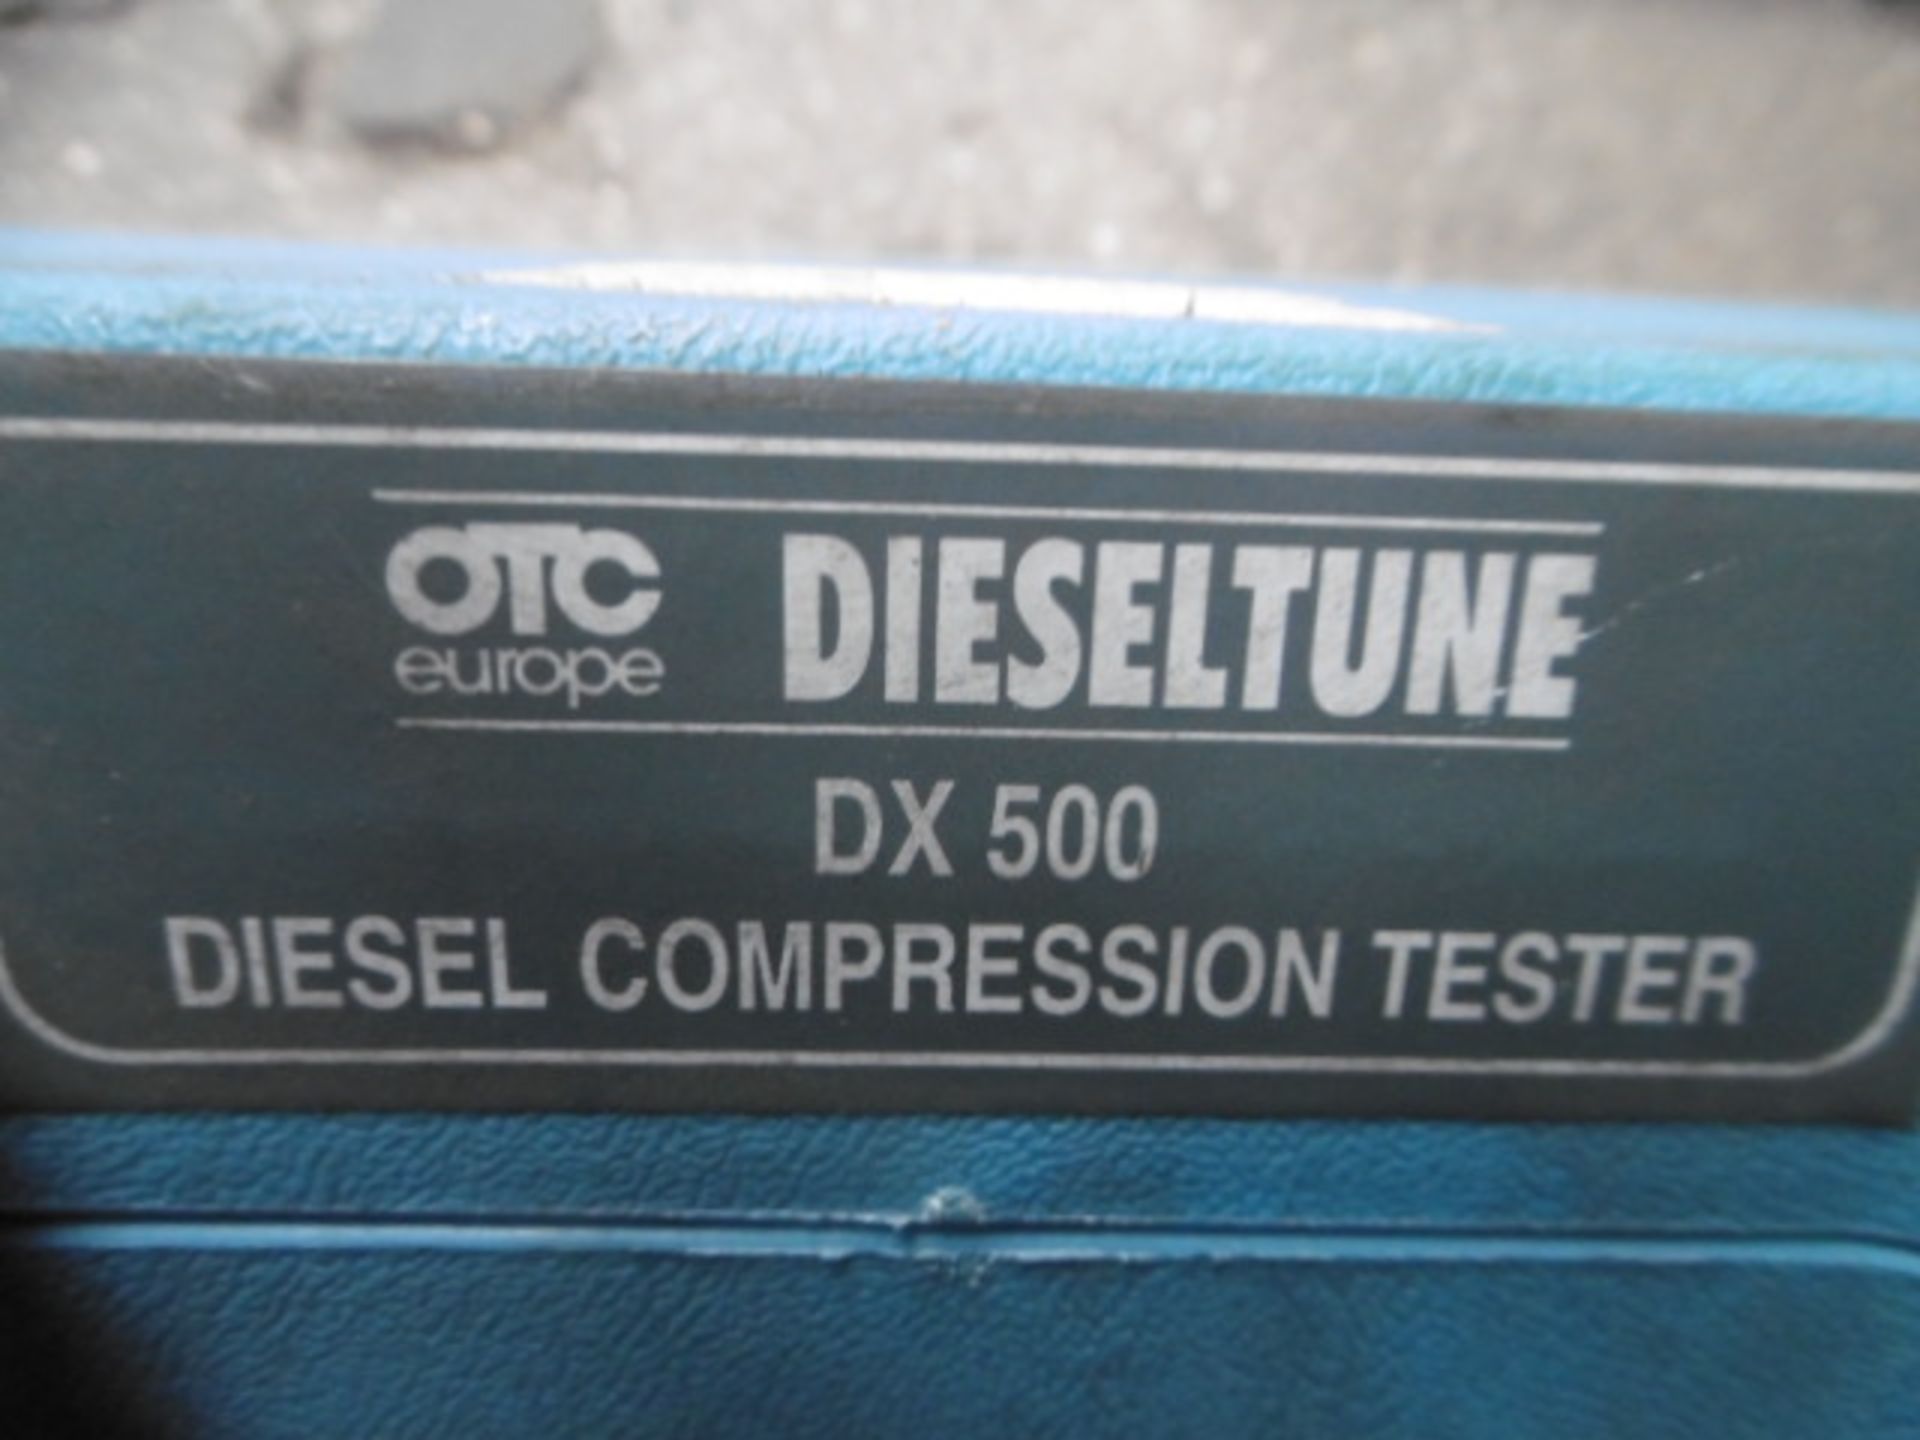 Dieseltune DX500 Diesel Compression Tester - Image 6 of 7